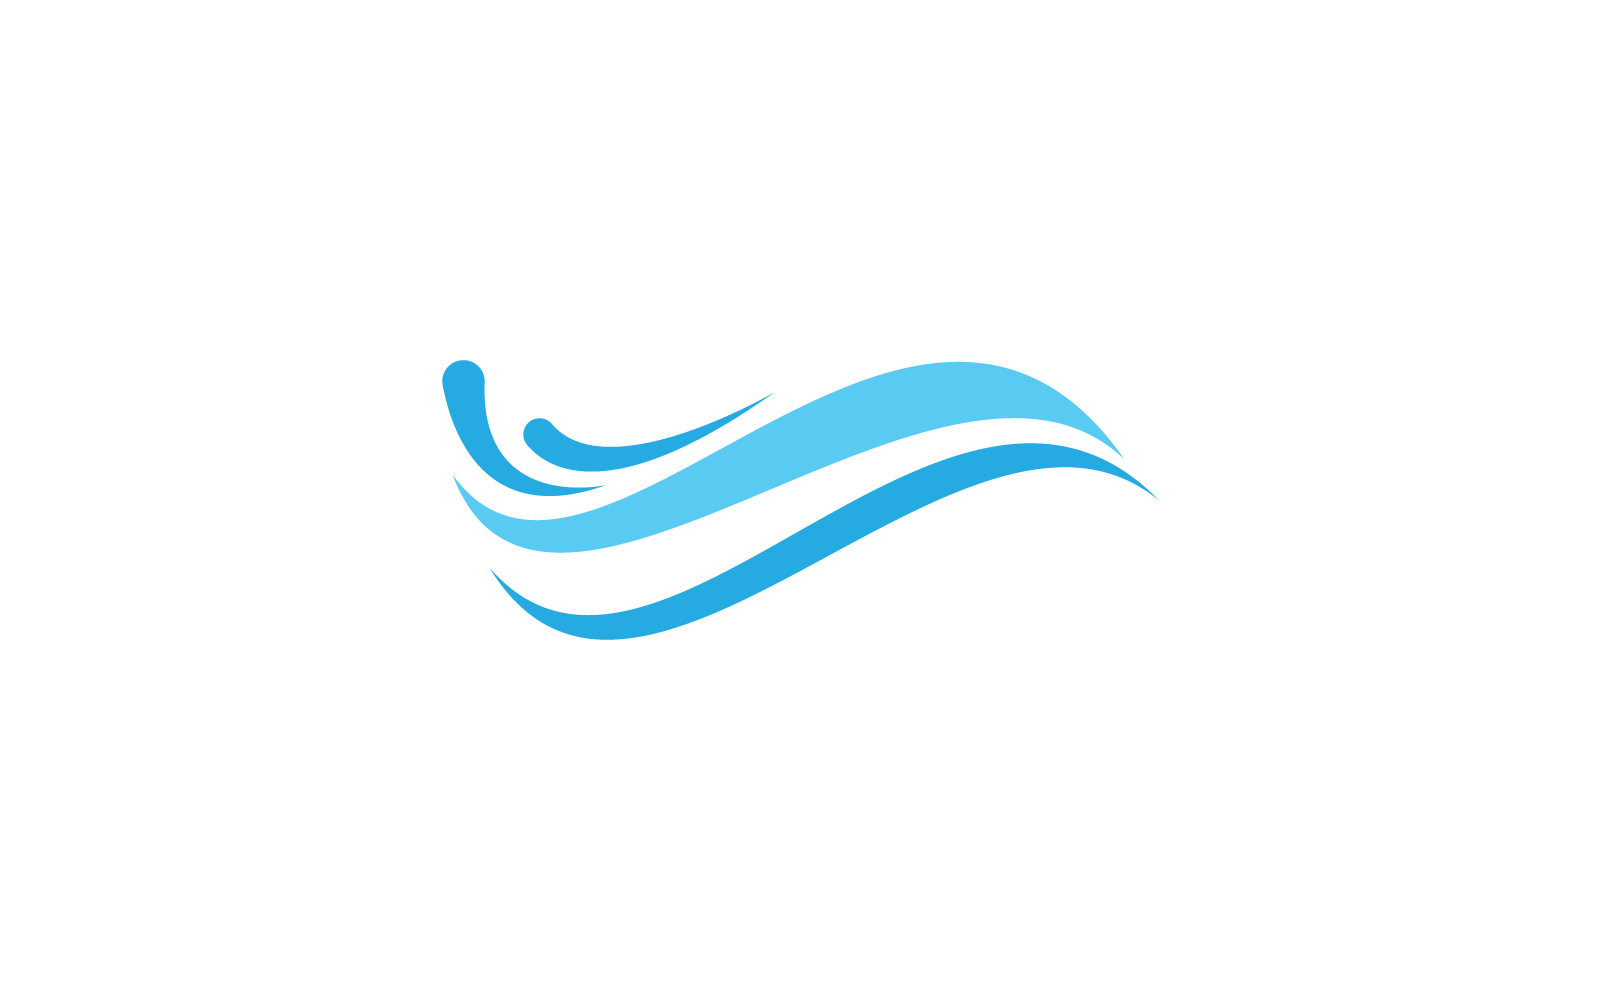 Water Wave illustration flat design logo template